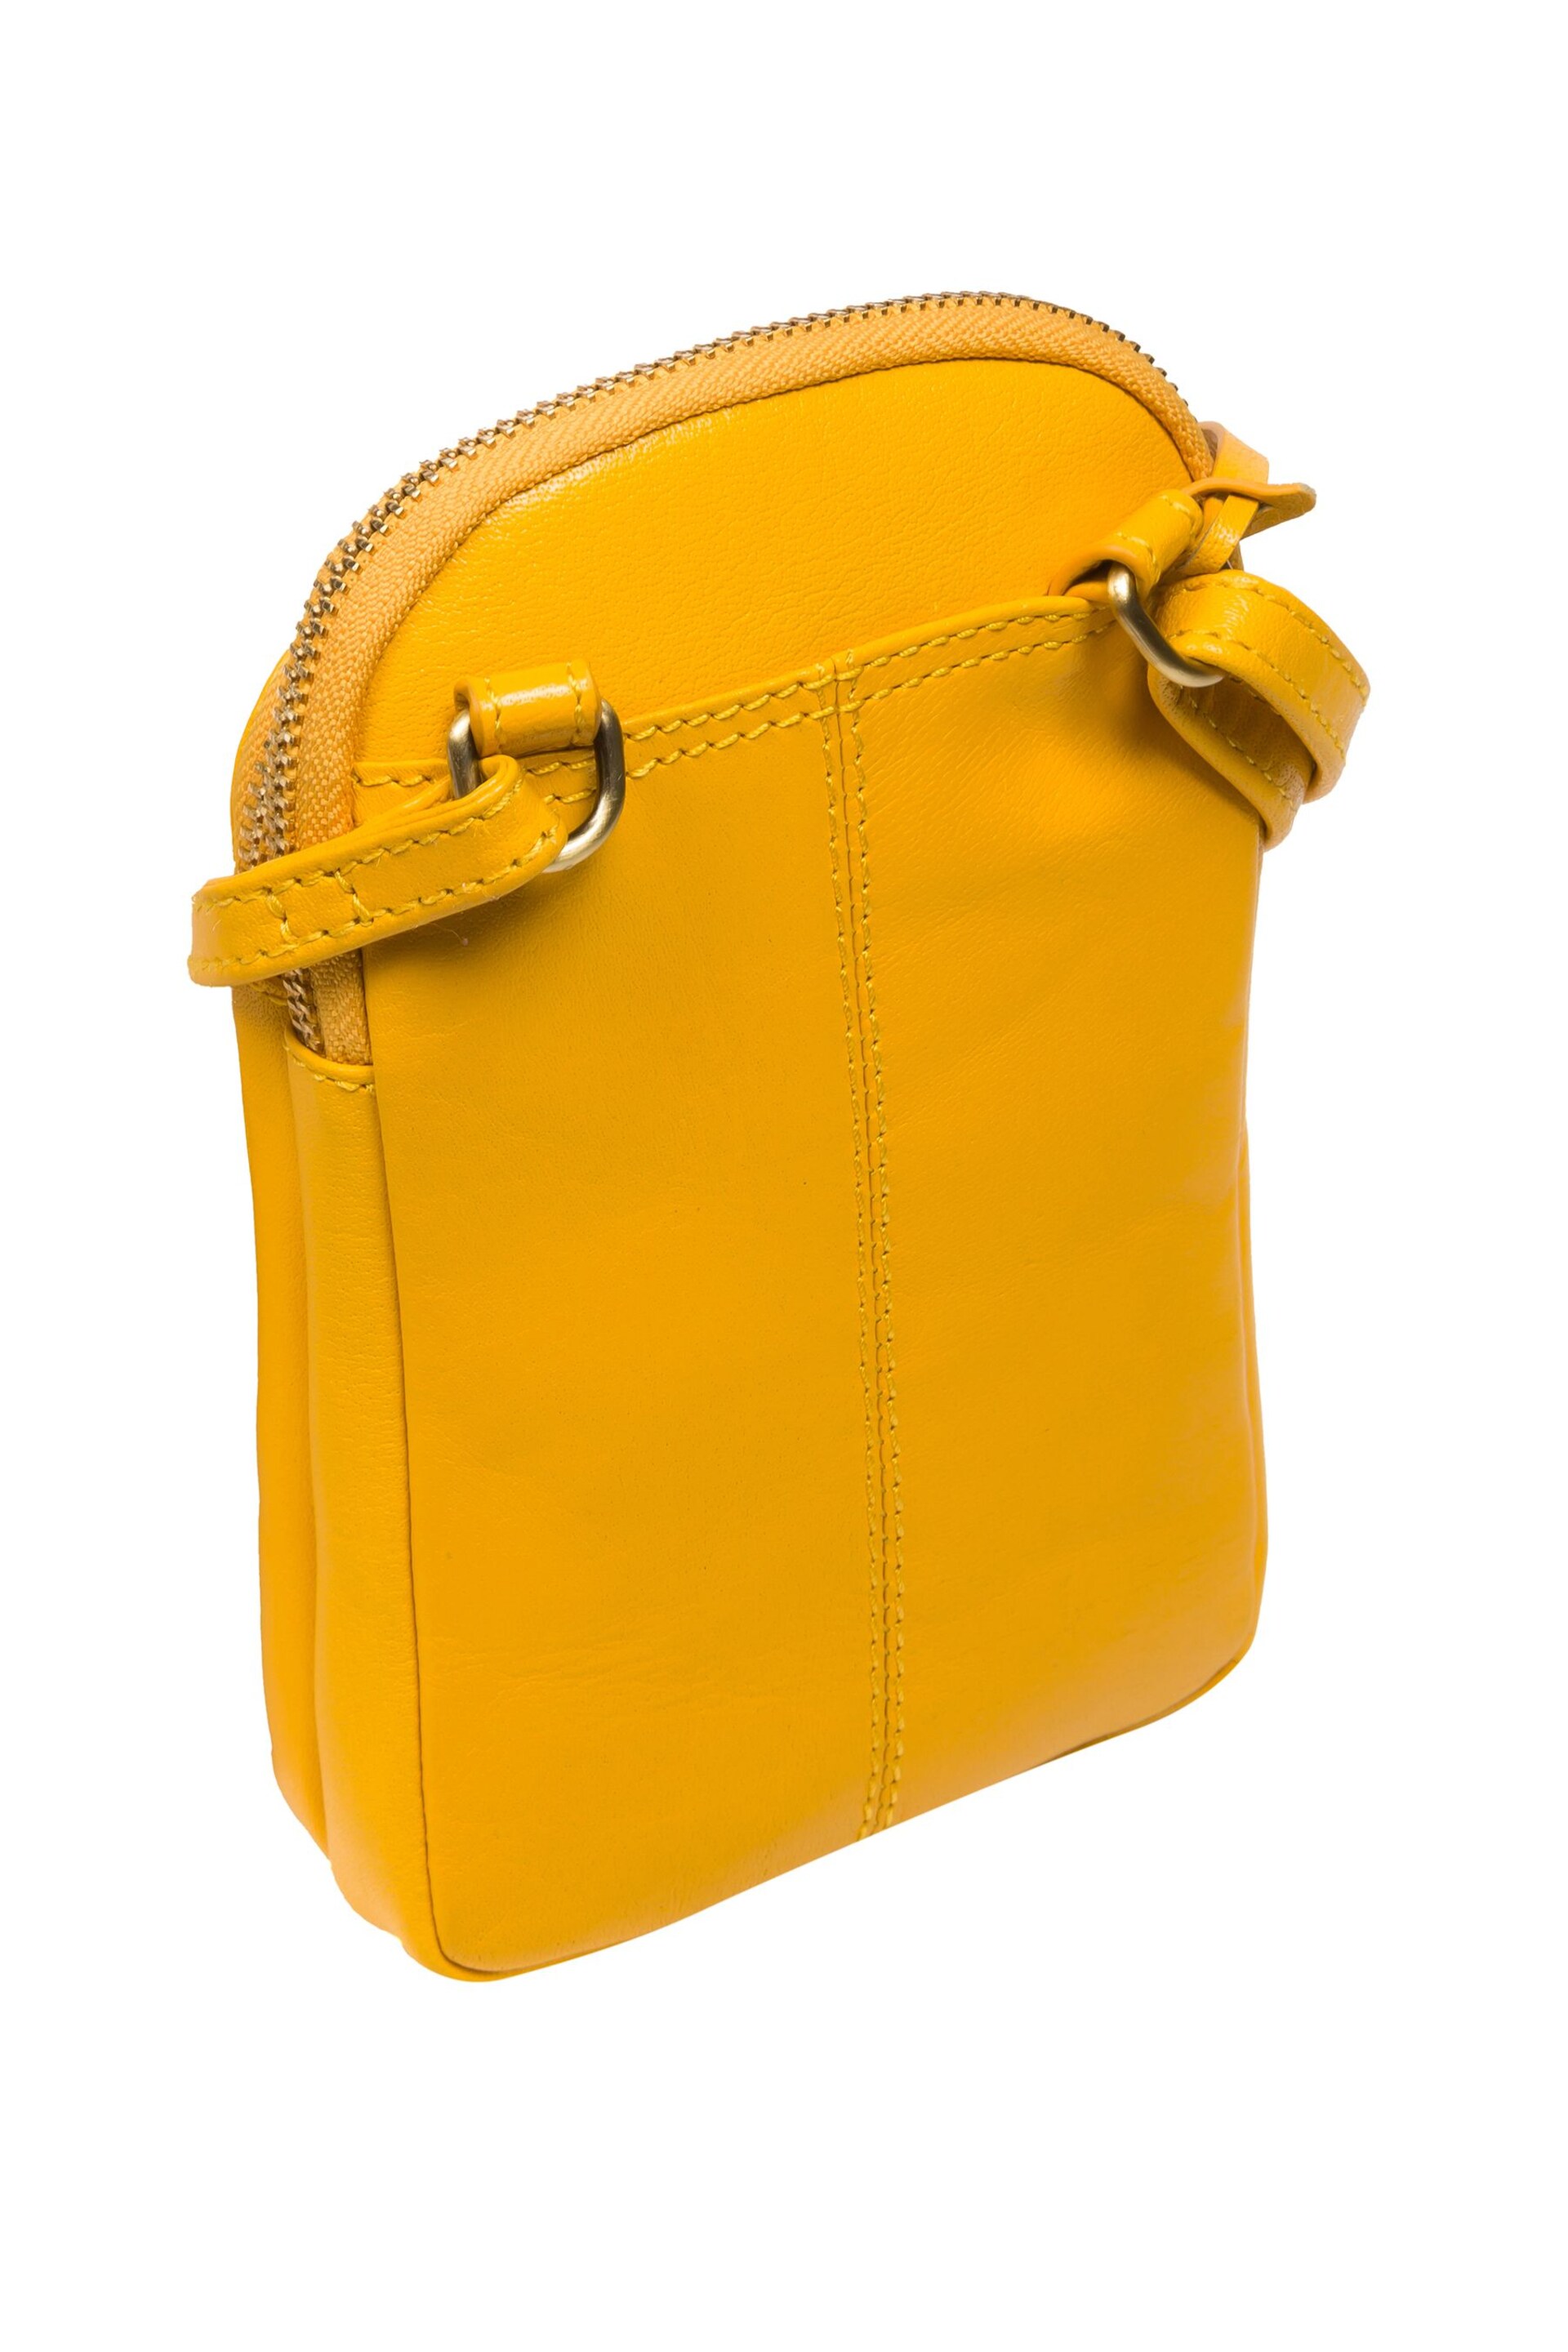 Conkca 'Leia' Leather Cross-Body Phone Bag - Image 3 of 7